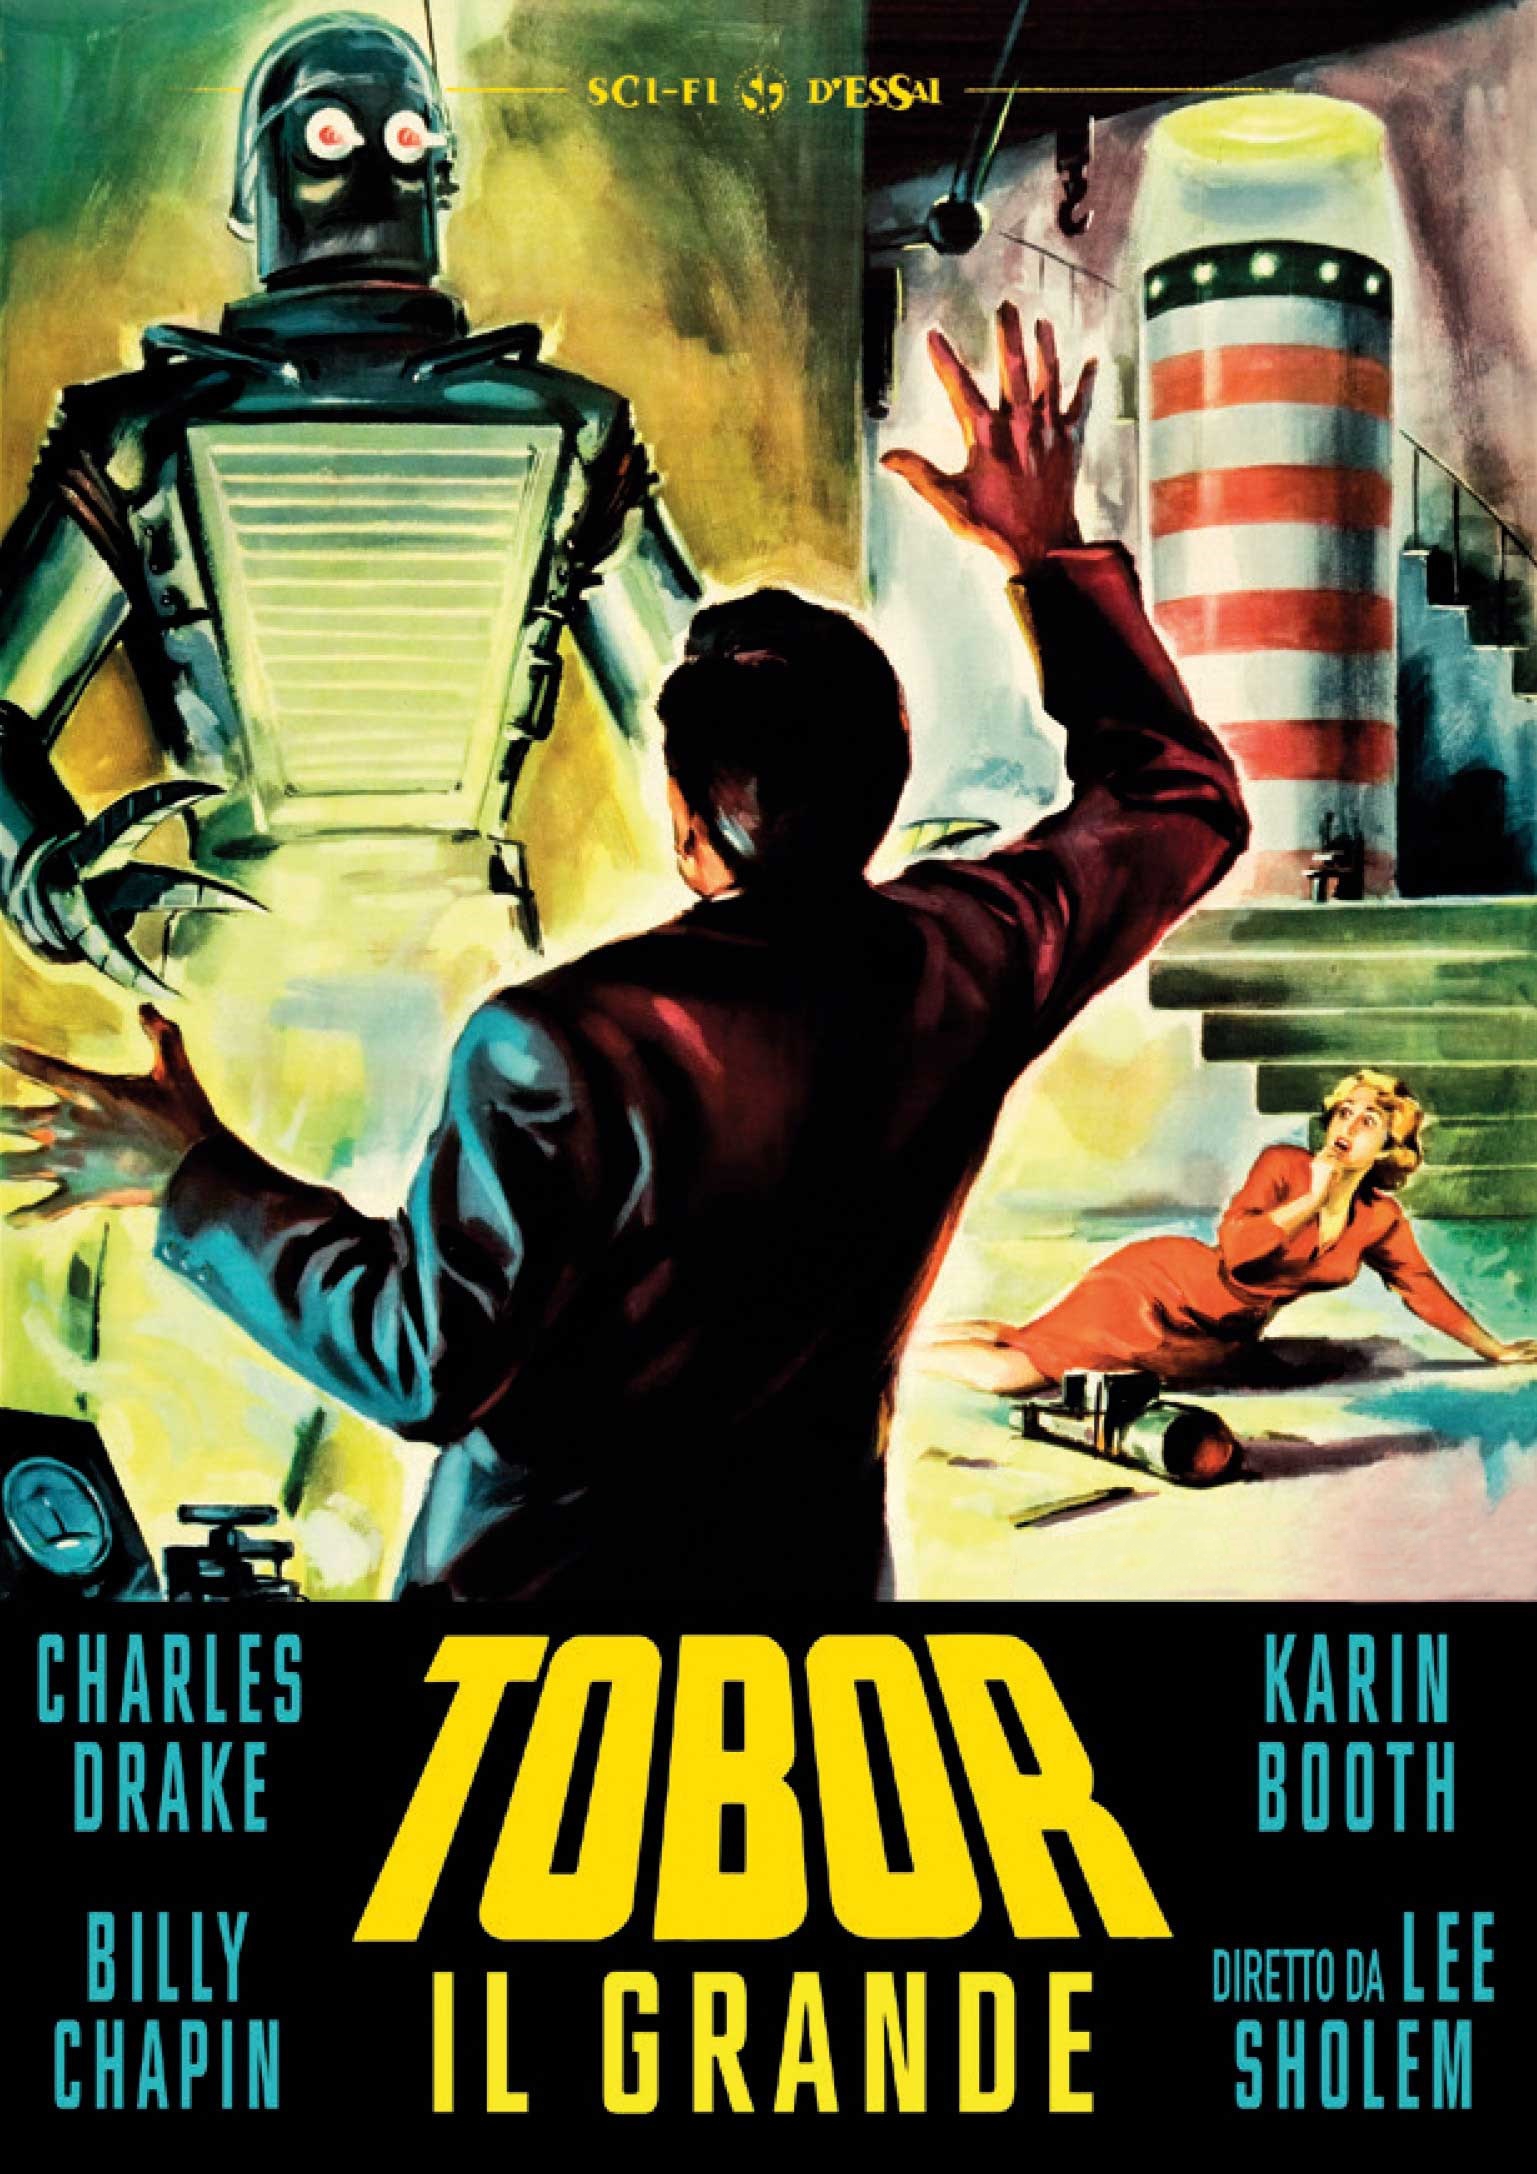 Tobor – Il grande [B/N] [HD] (1954)